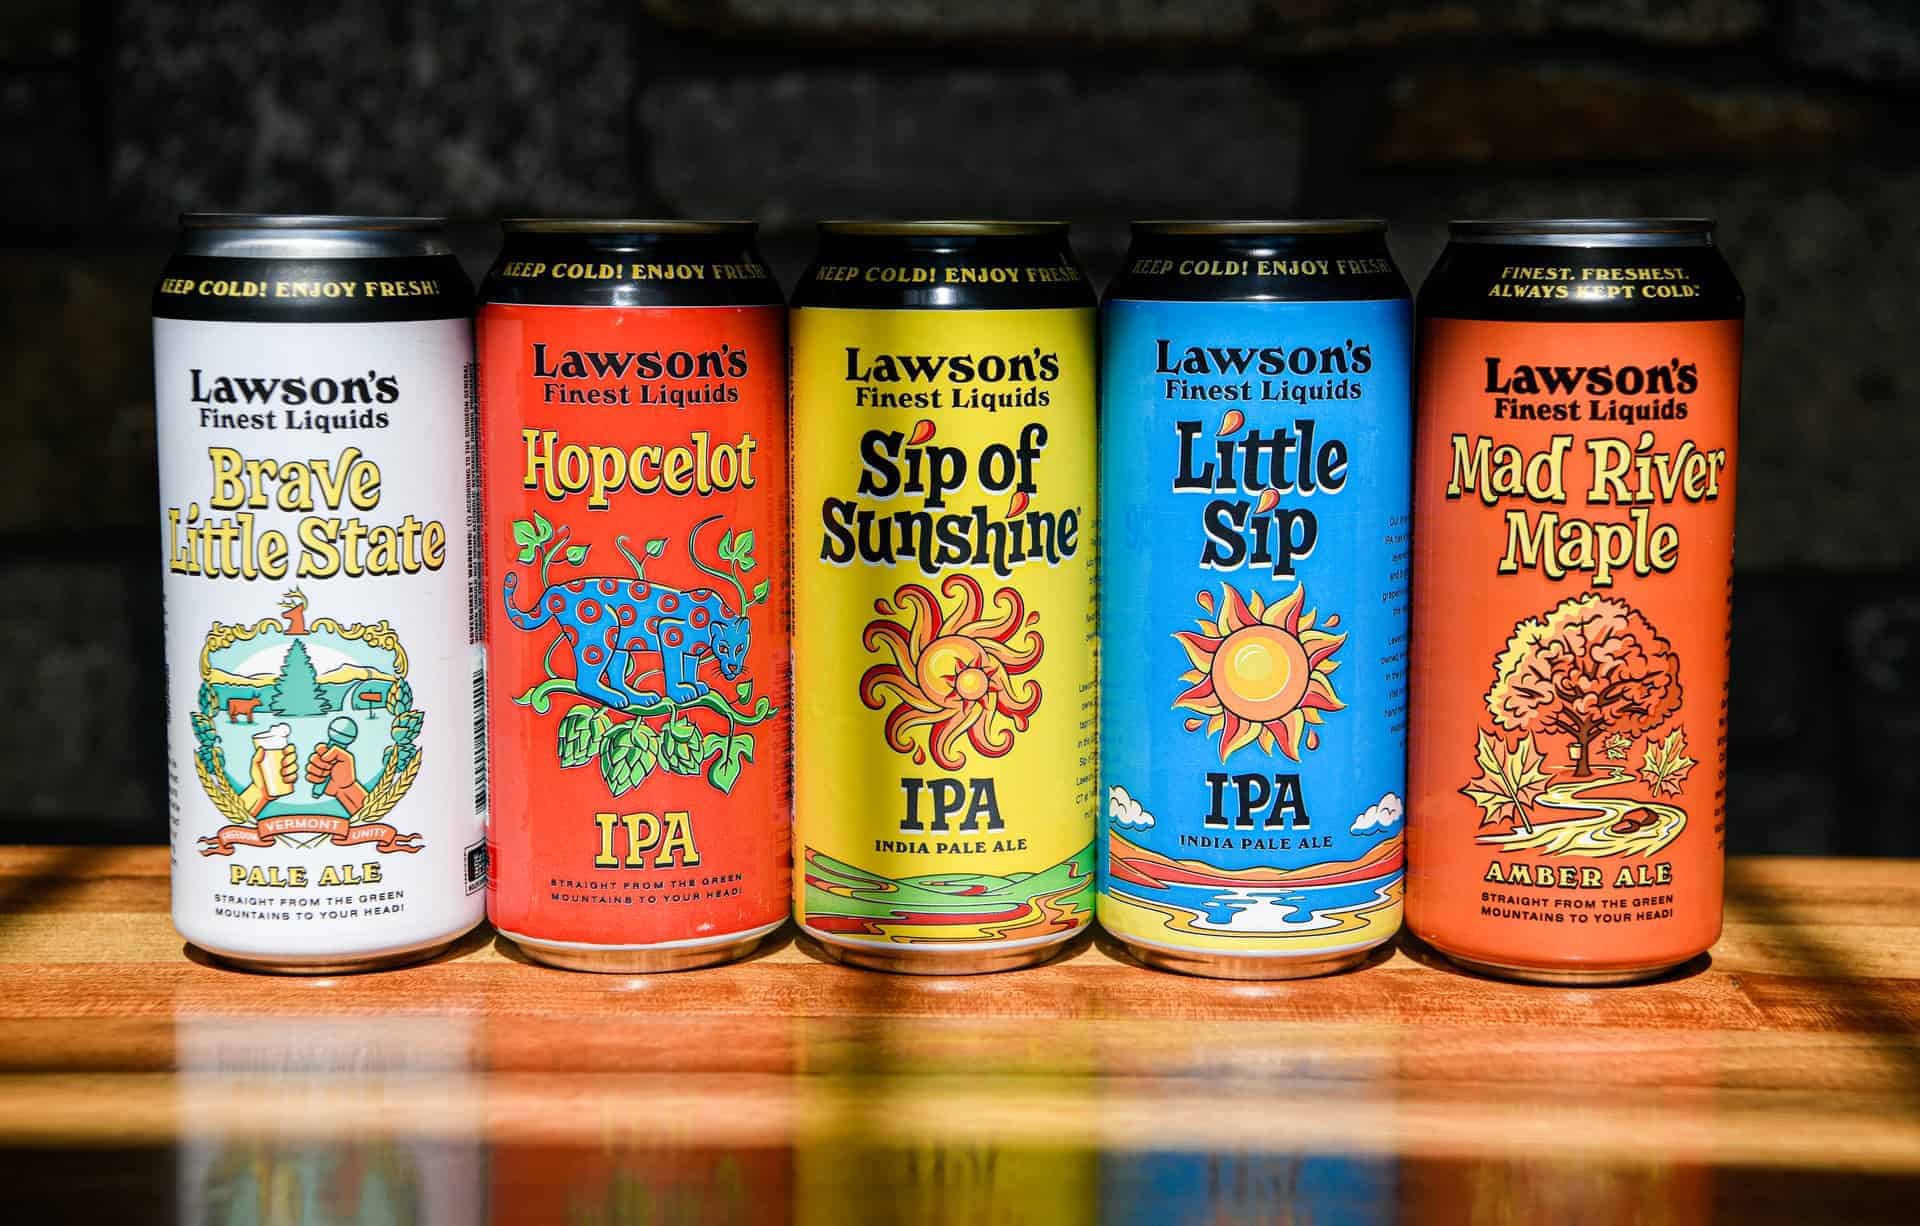 Lawson's Finest Liquids - IPA Cans